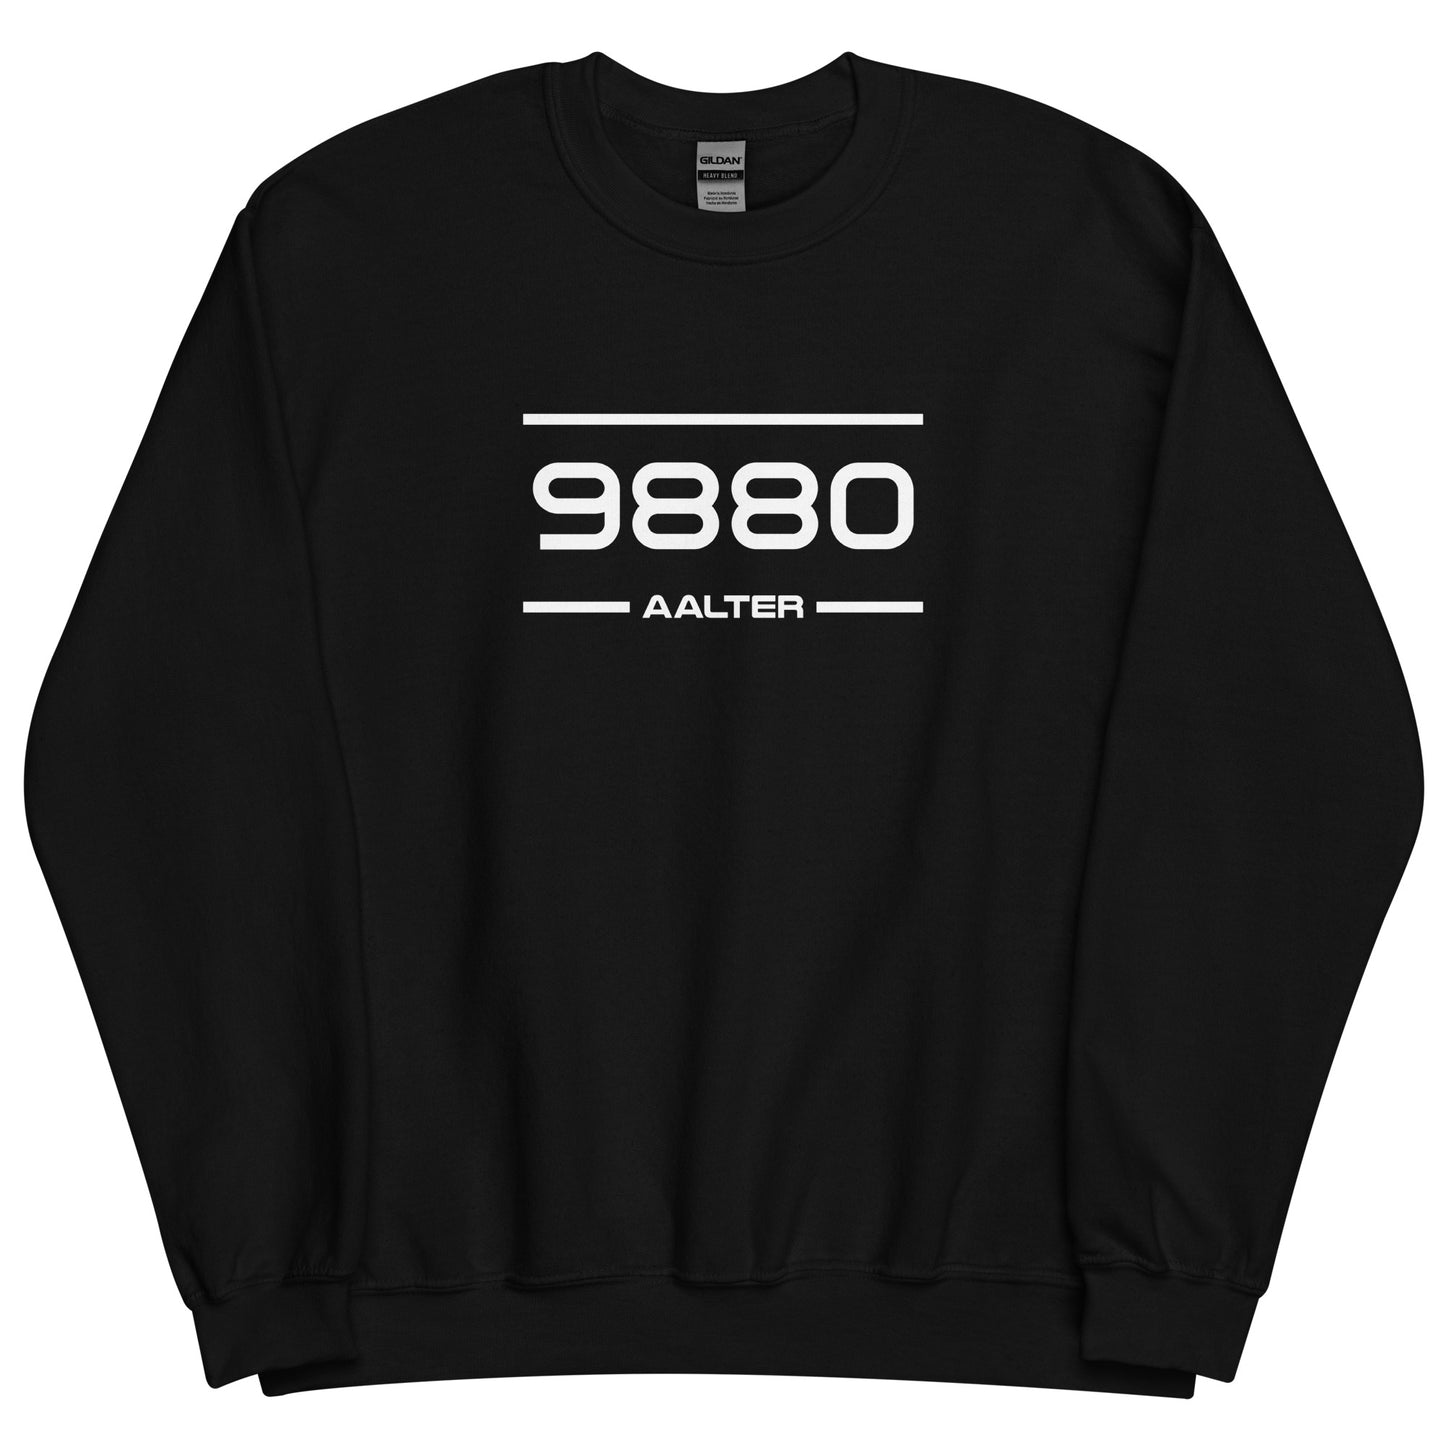 Sweater - 9880 - Aalter (M/V)